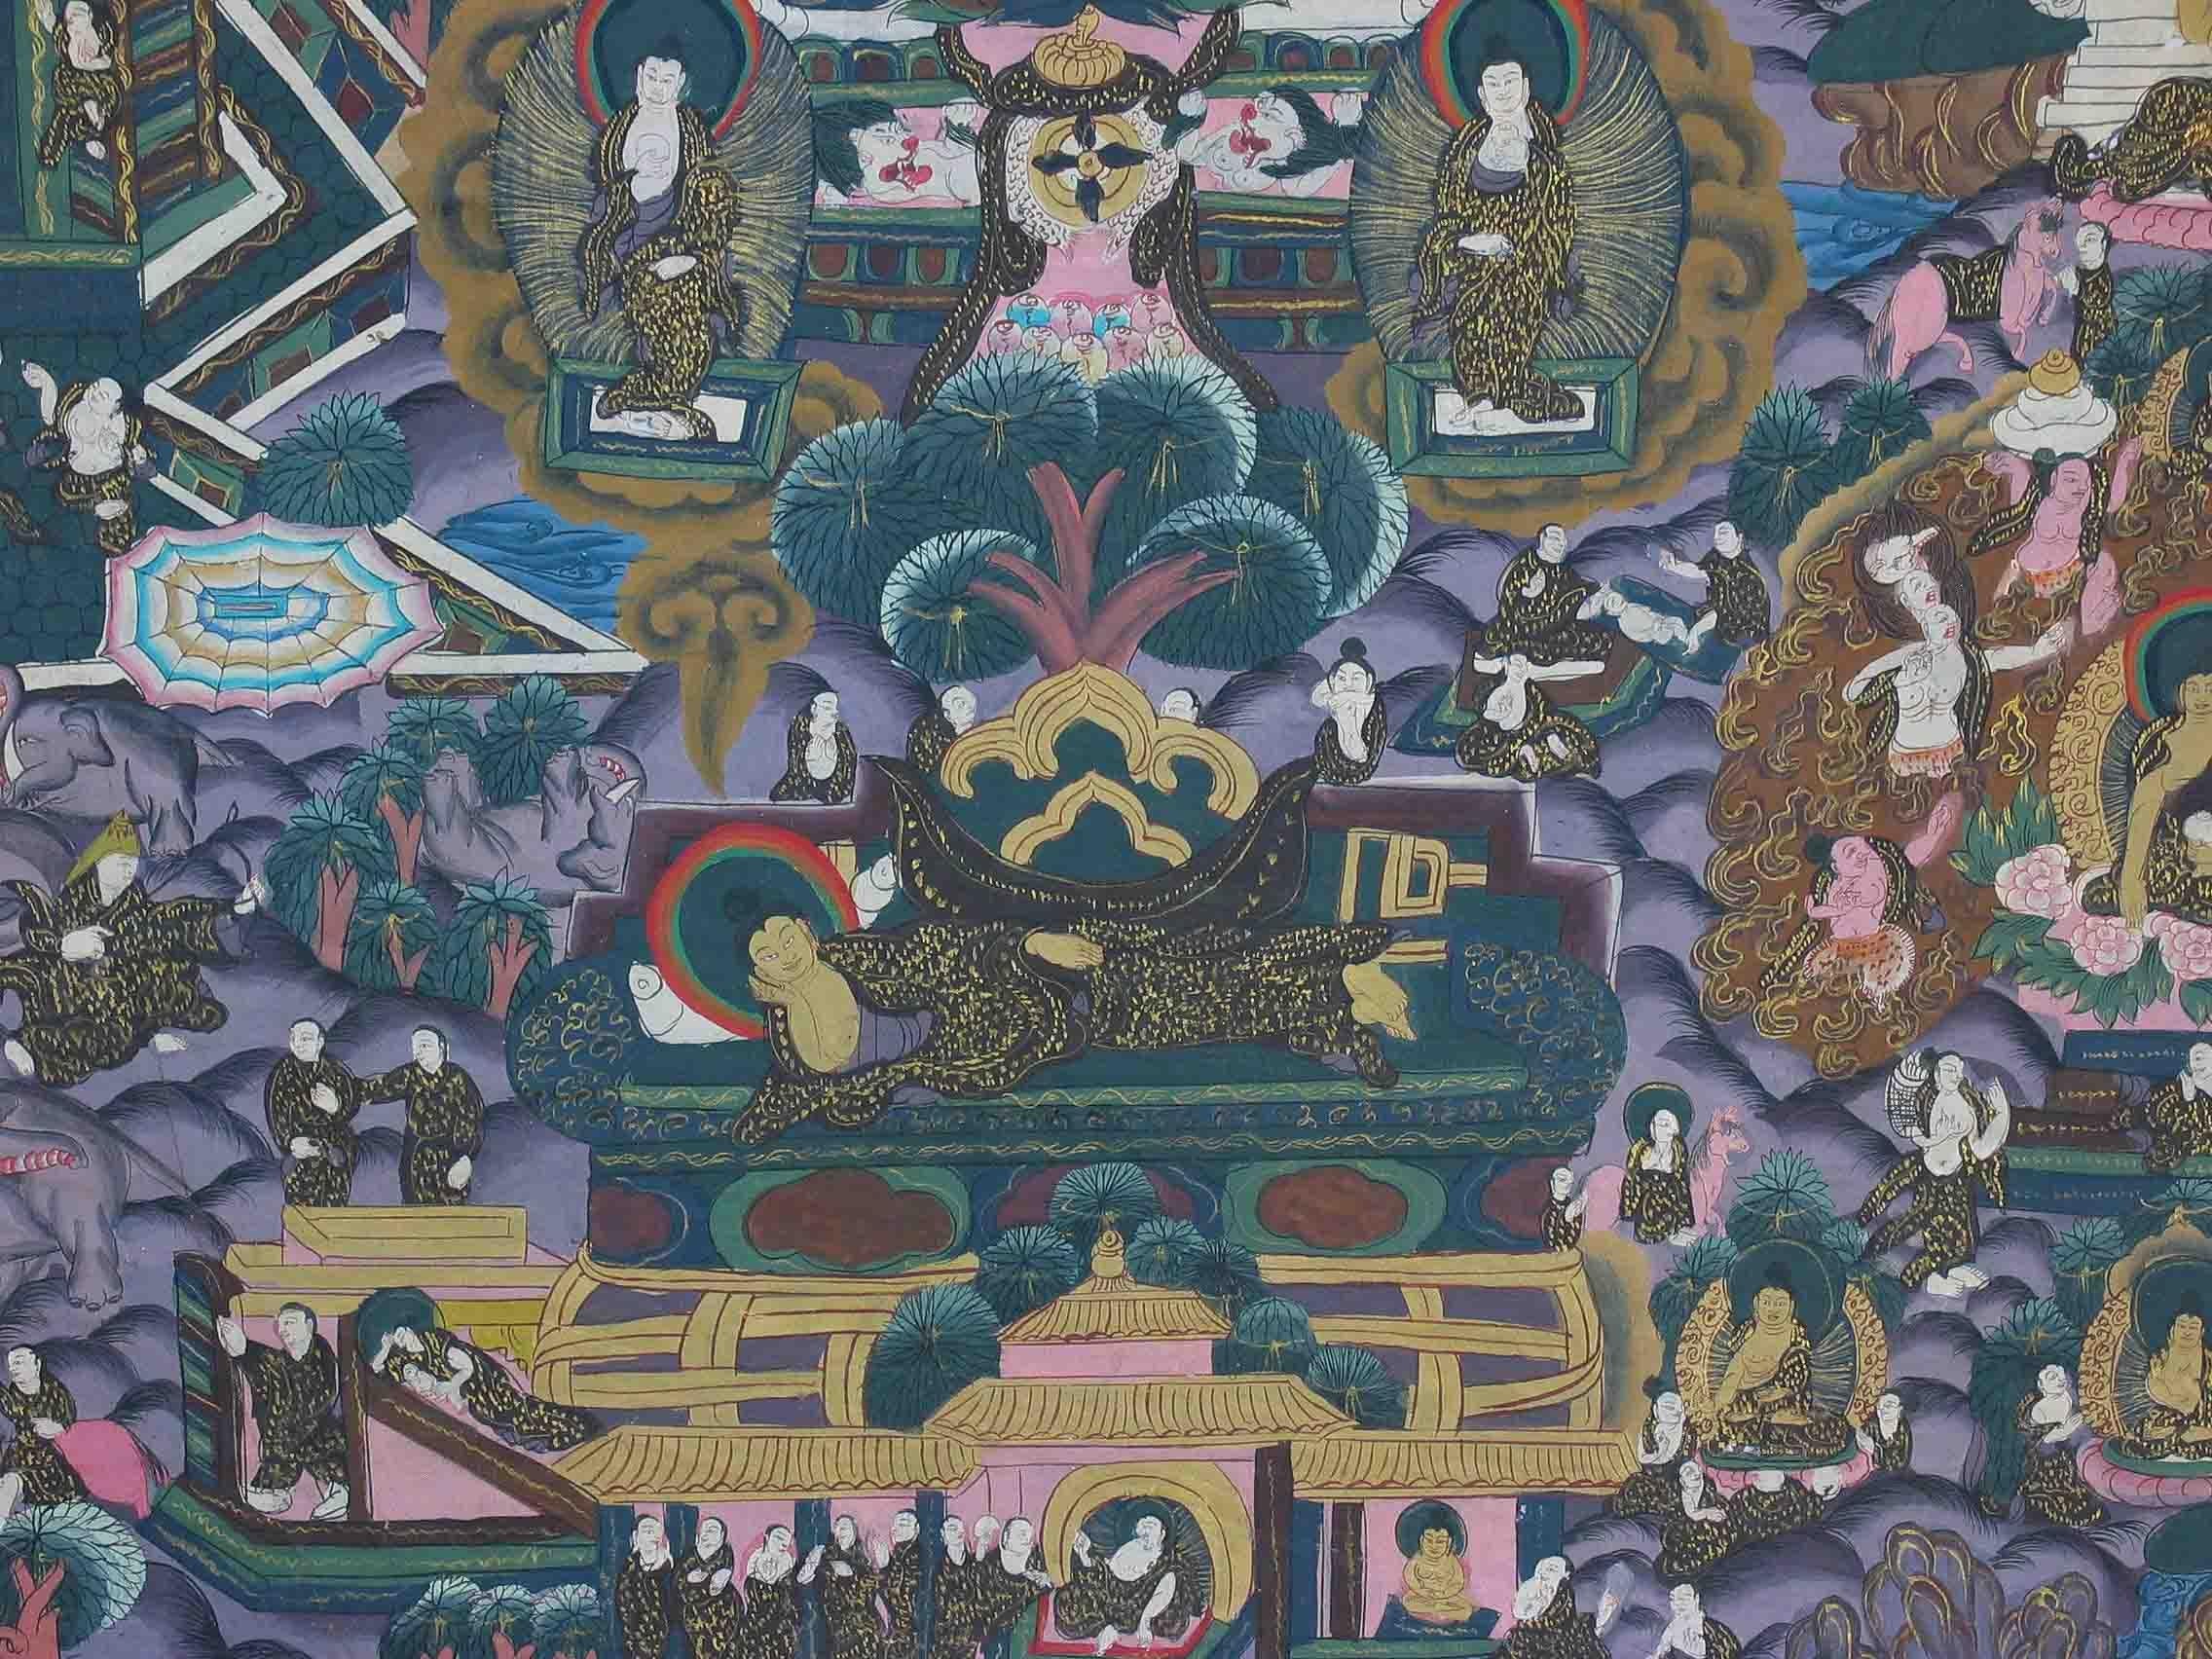 Tibetan Thangka of Shakyamuni Buddha and His Life Stories, Tibet Early 20th Century